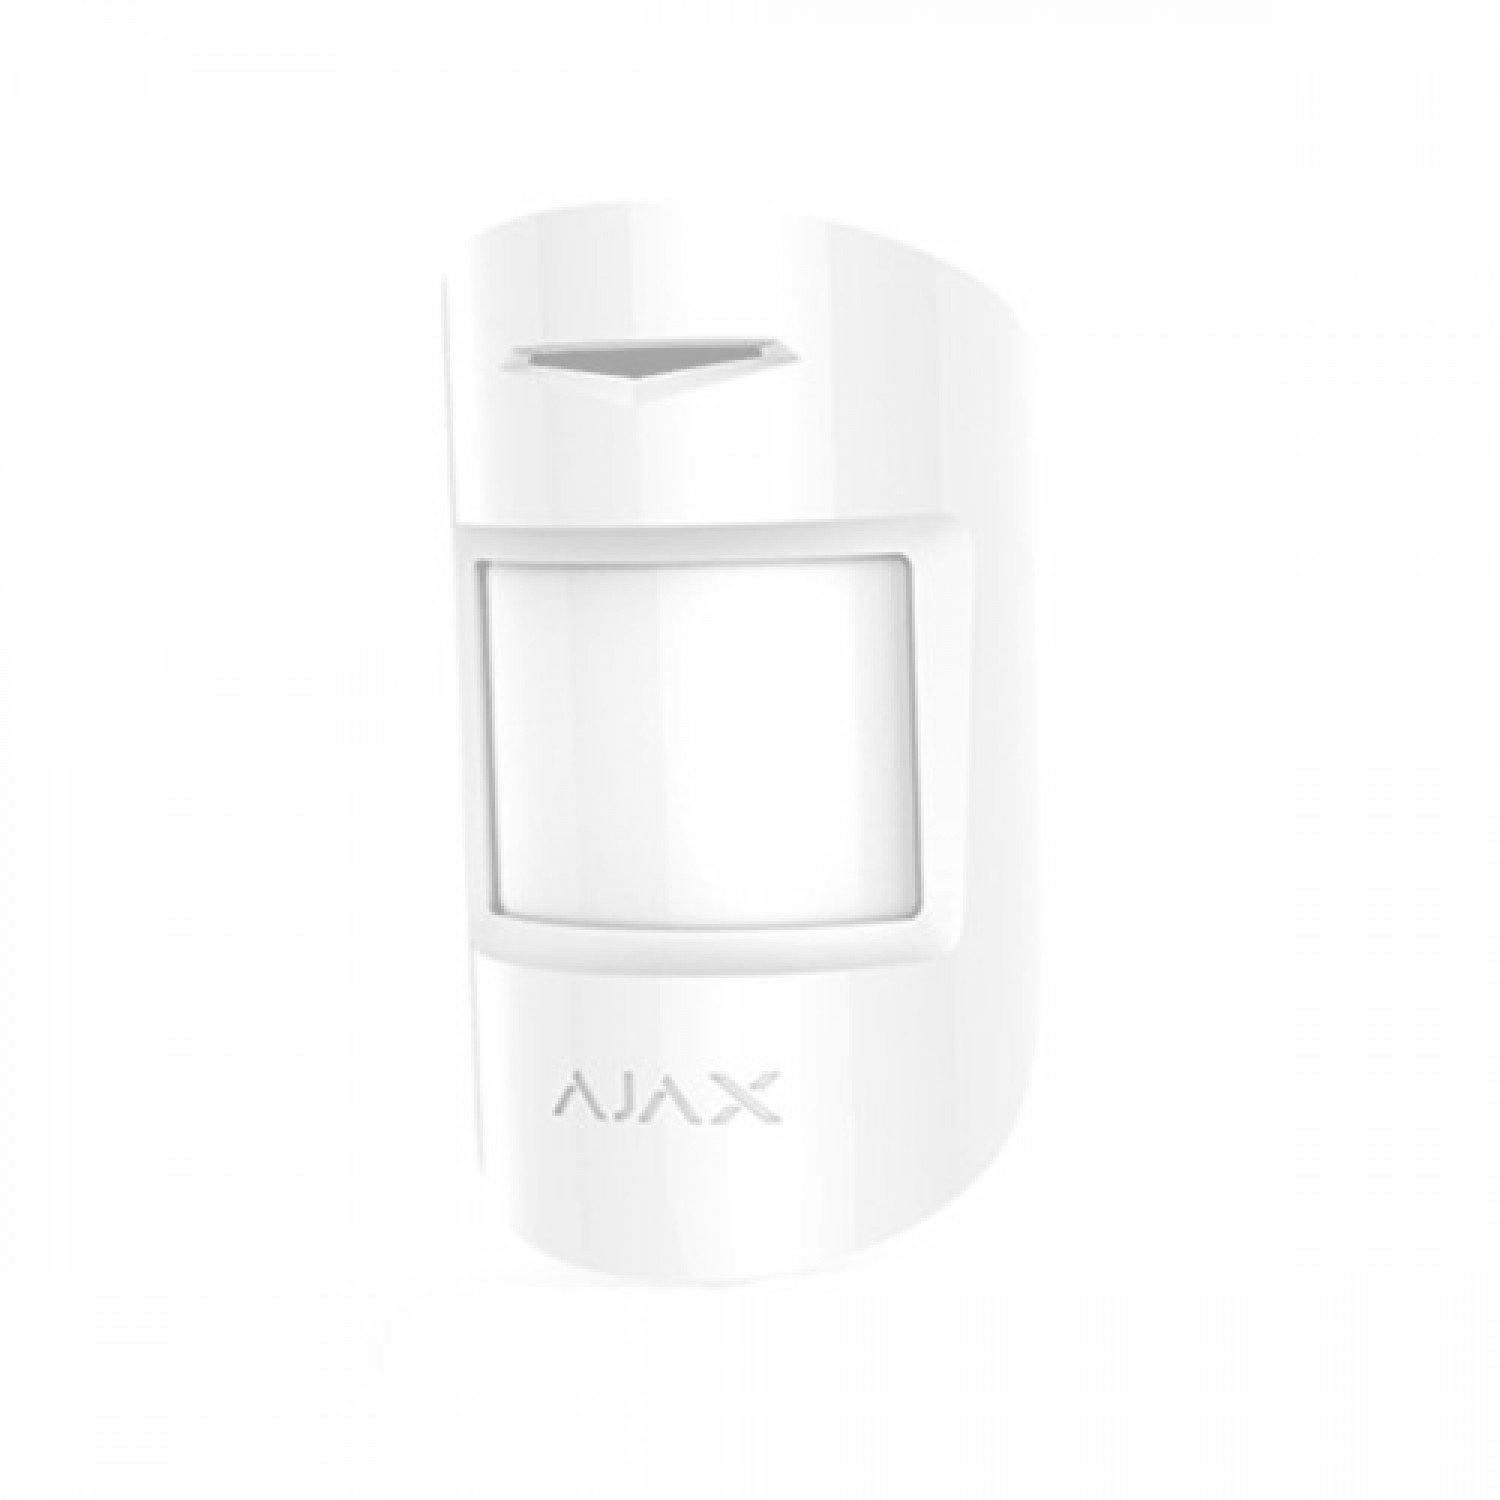 alt_image Компонент Ajax 963 MotionProtect white датчик движения 1149